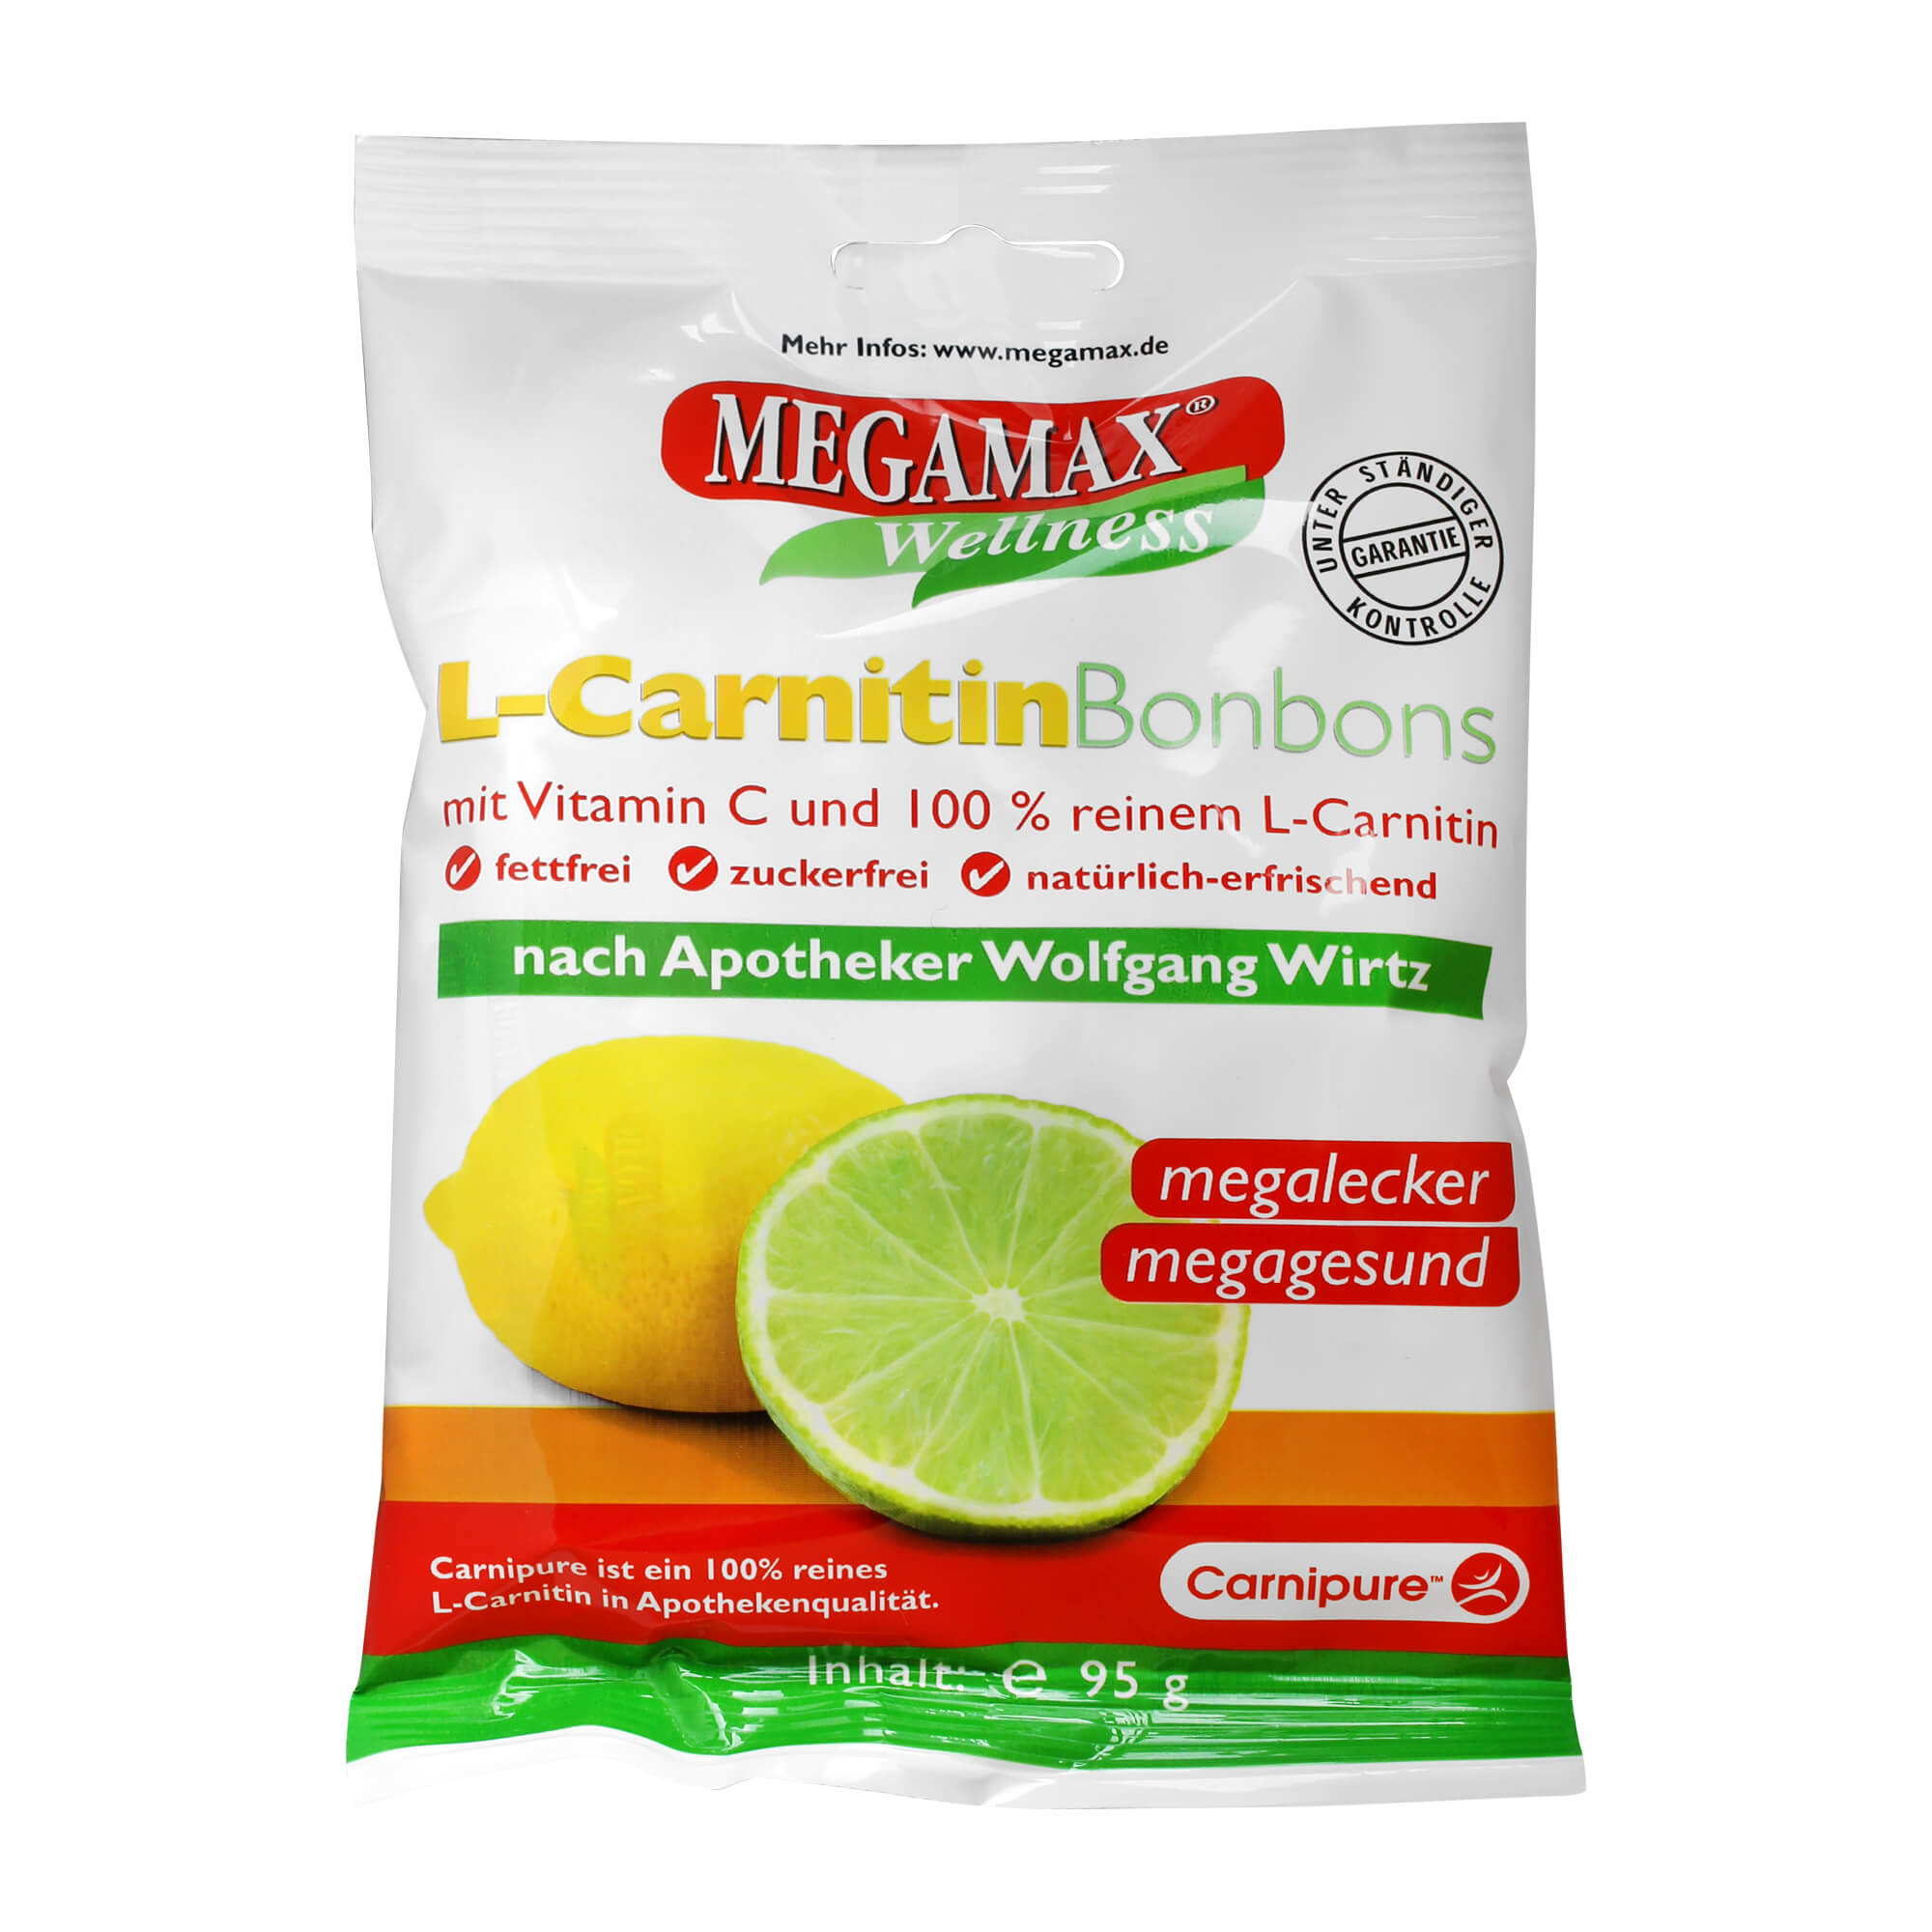 Lebensmittel - Bonbons mit L-Carnitin, Süßungsmitteln und Vitamin C.